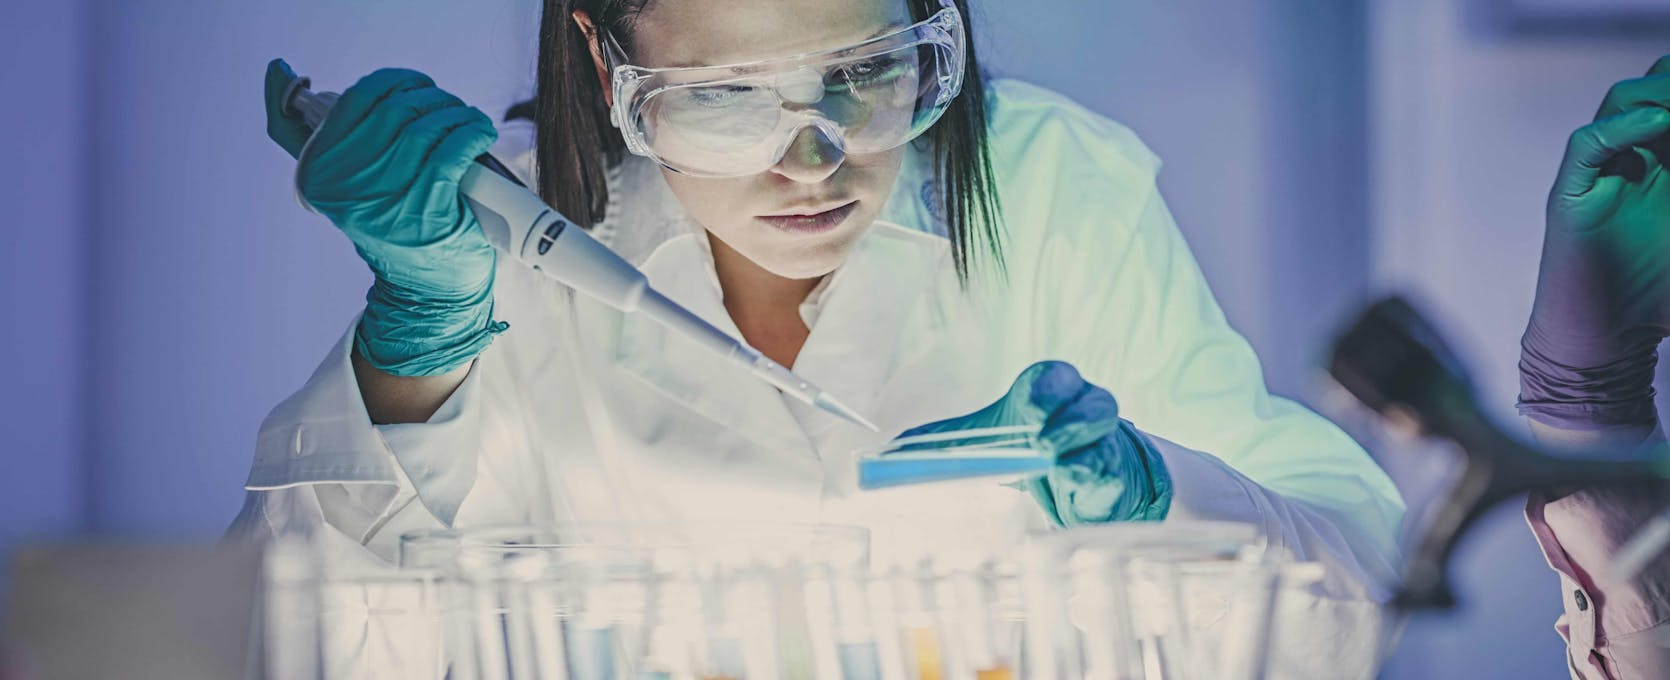 Scientist measures samples in a lab